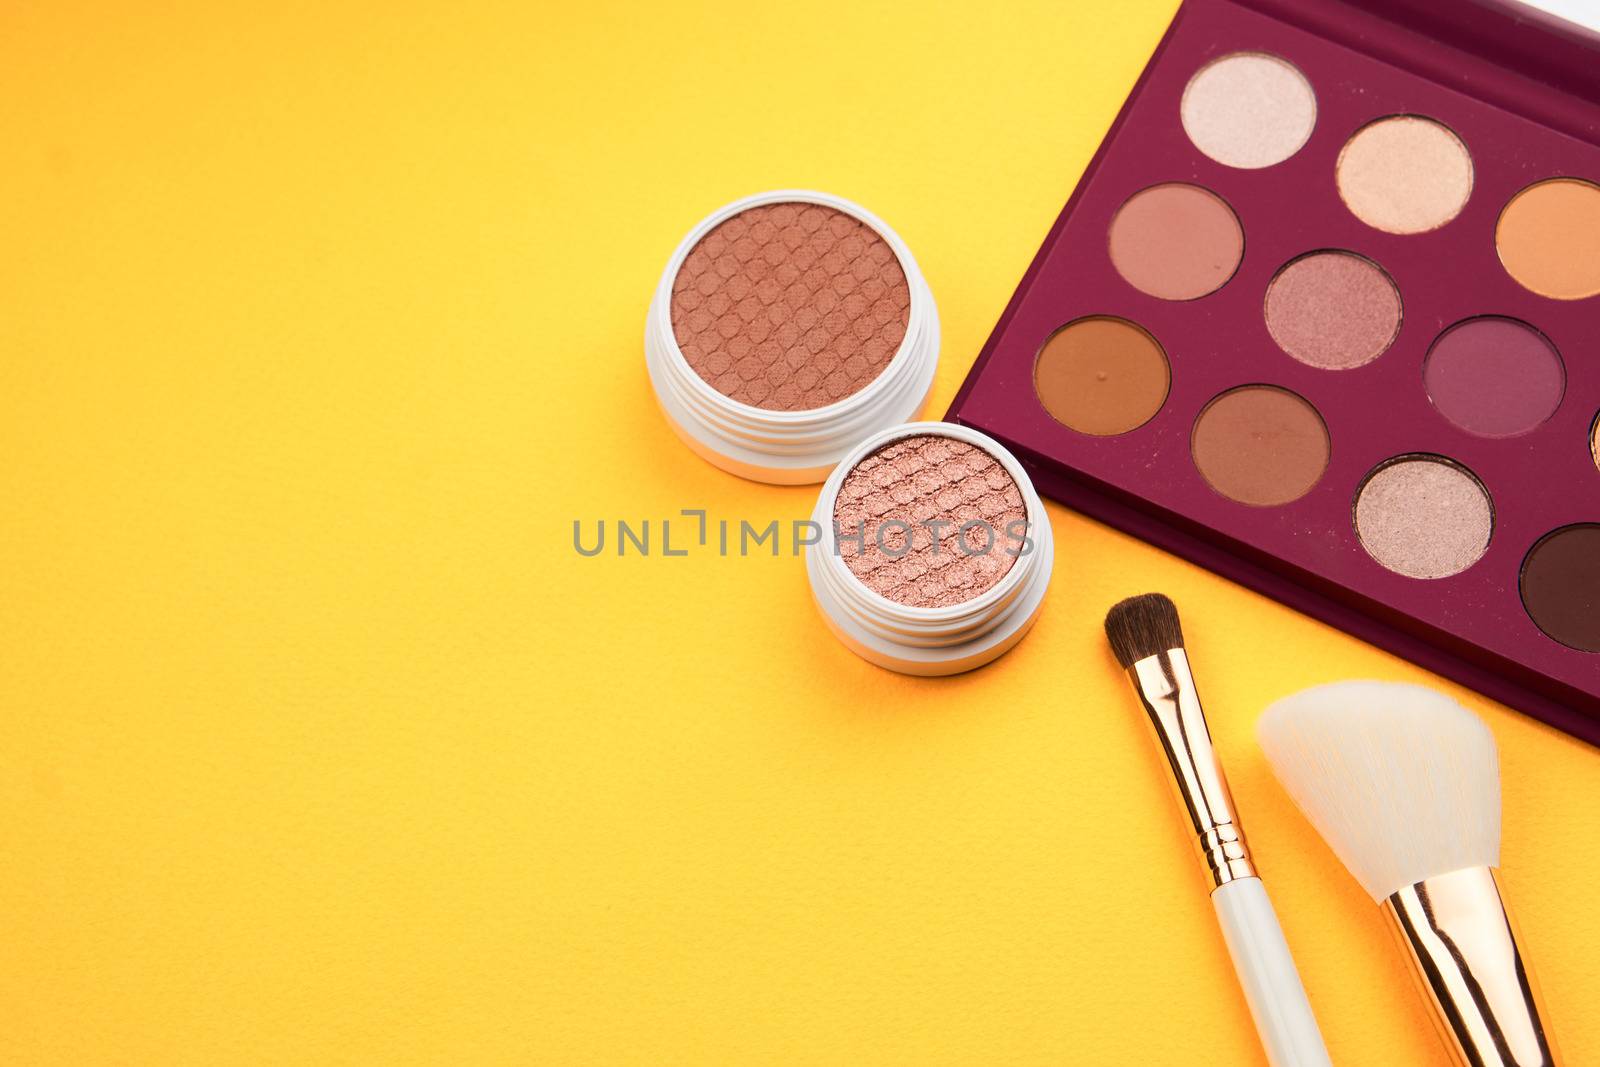 eyeshadow powder blush makeup brushes yellow background. High quality photo Copy space